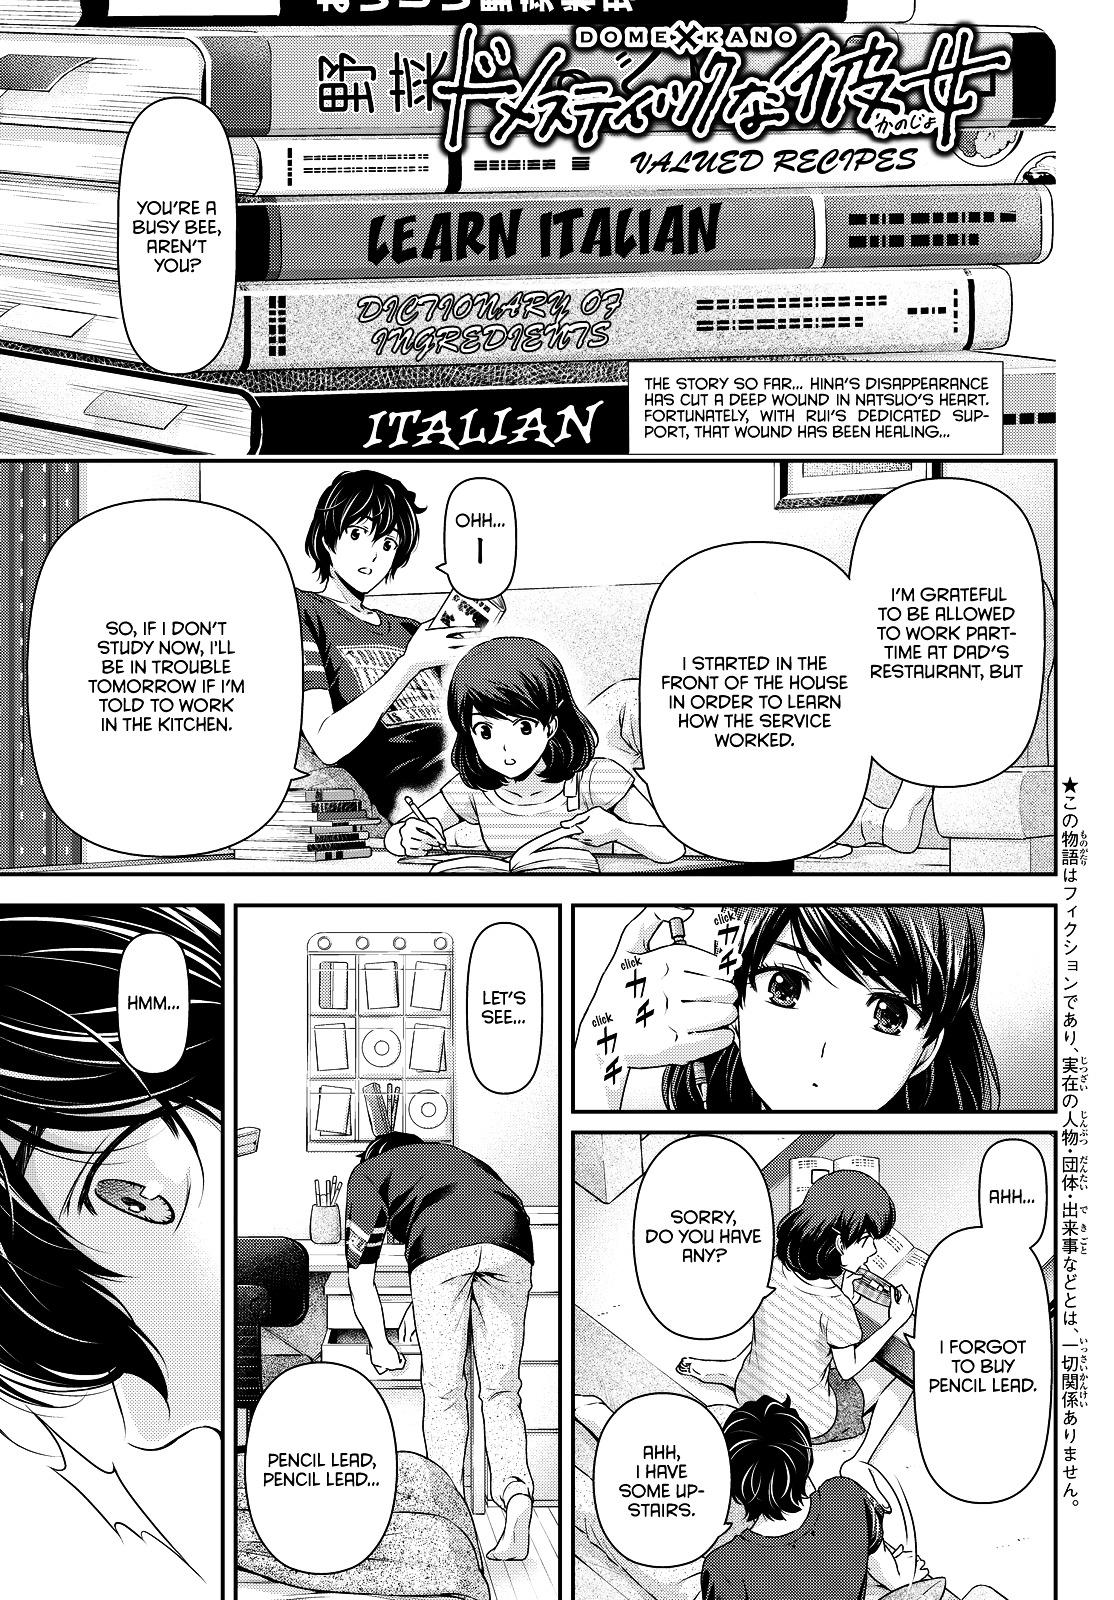 Domestic Girlfriend Volume 9 (Domestic na Kanojo) - Manga Store